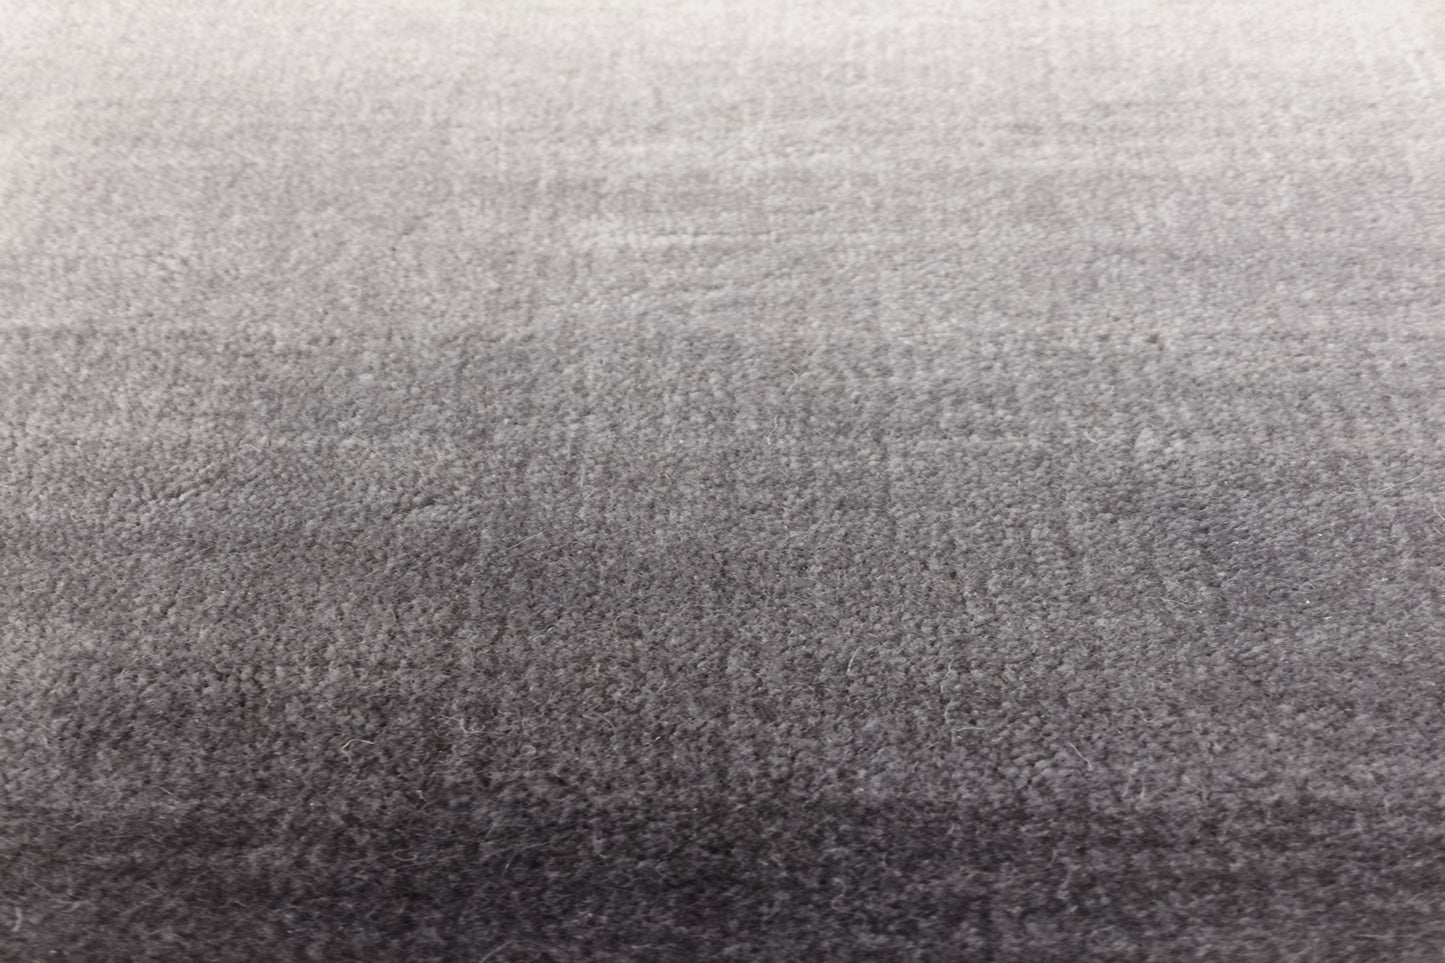 Tudor grey rug